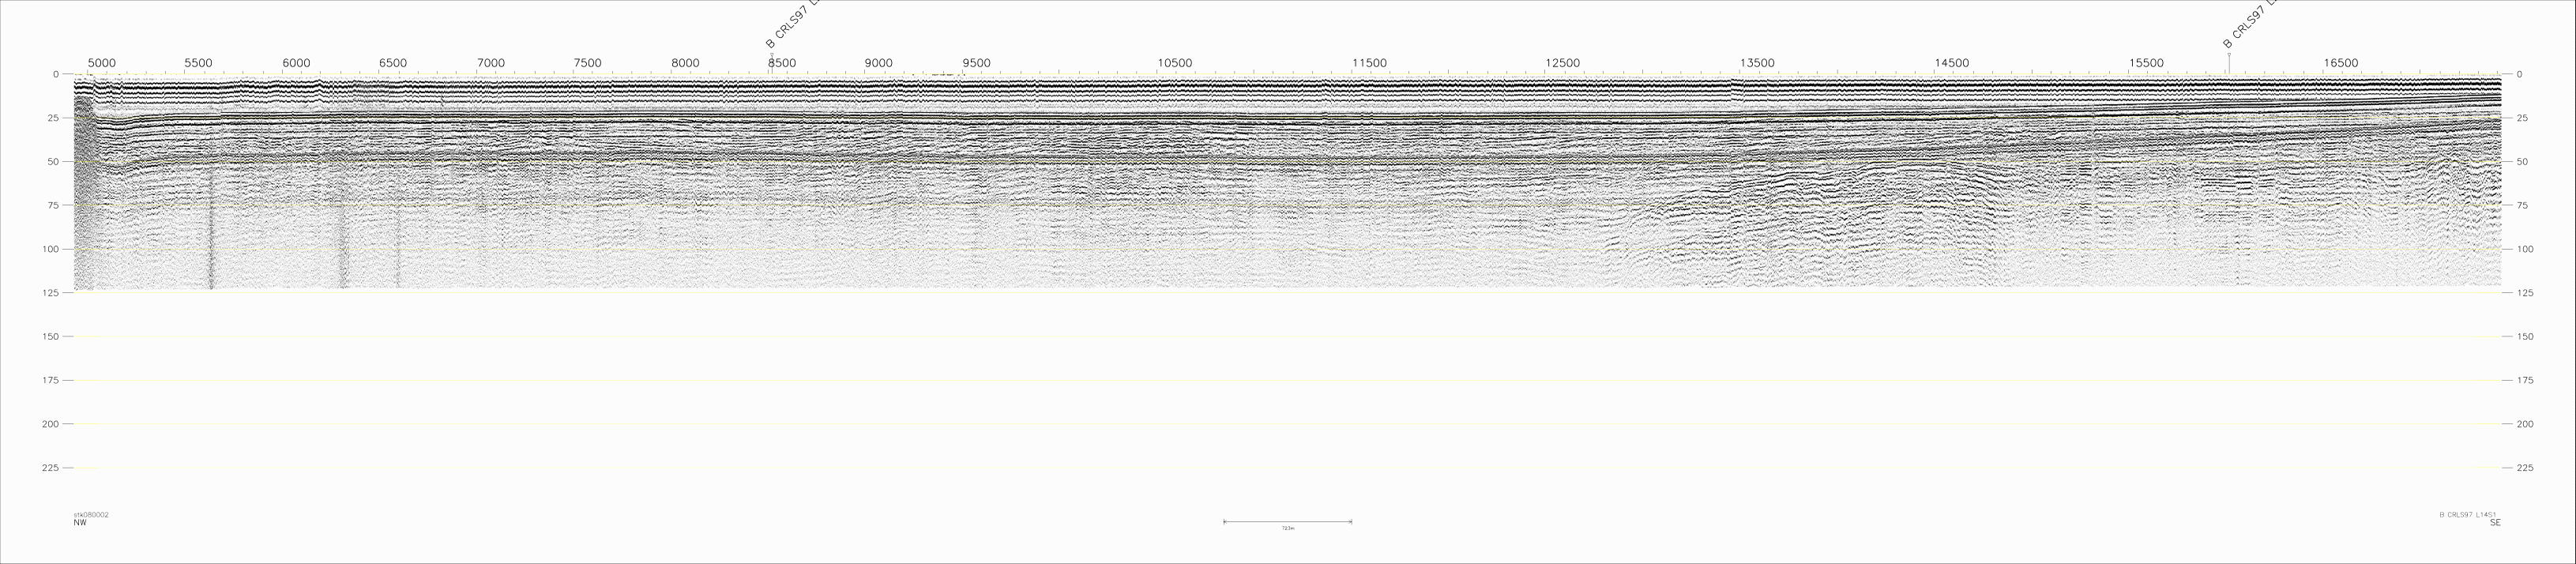 Seismic Reflection Profile Line No.: L14s1b (424743 bytes)